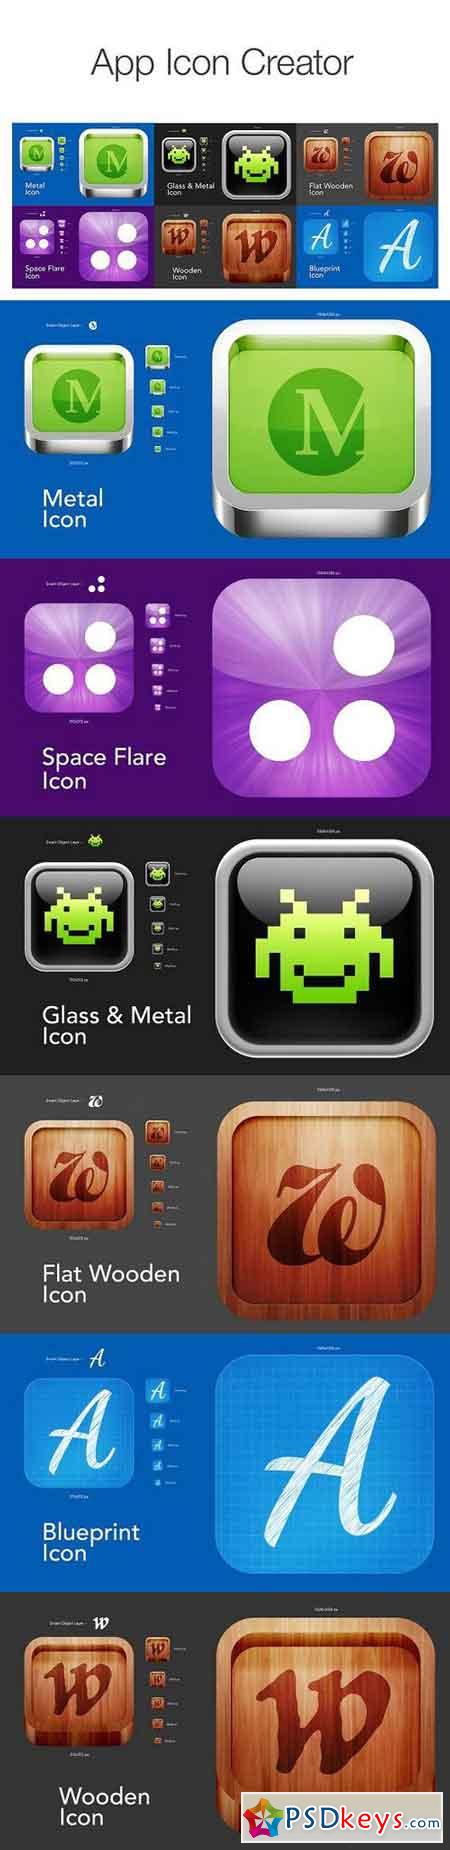 App Icon Creator 793899